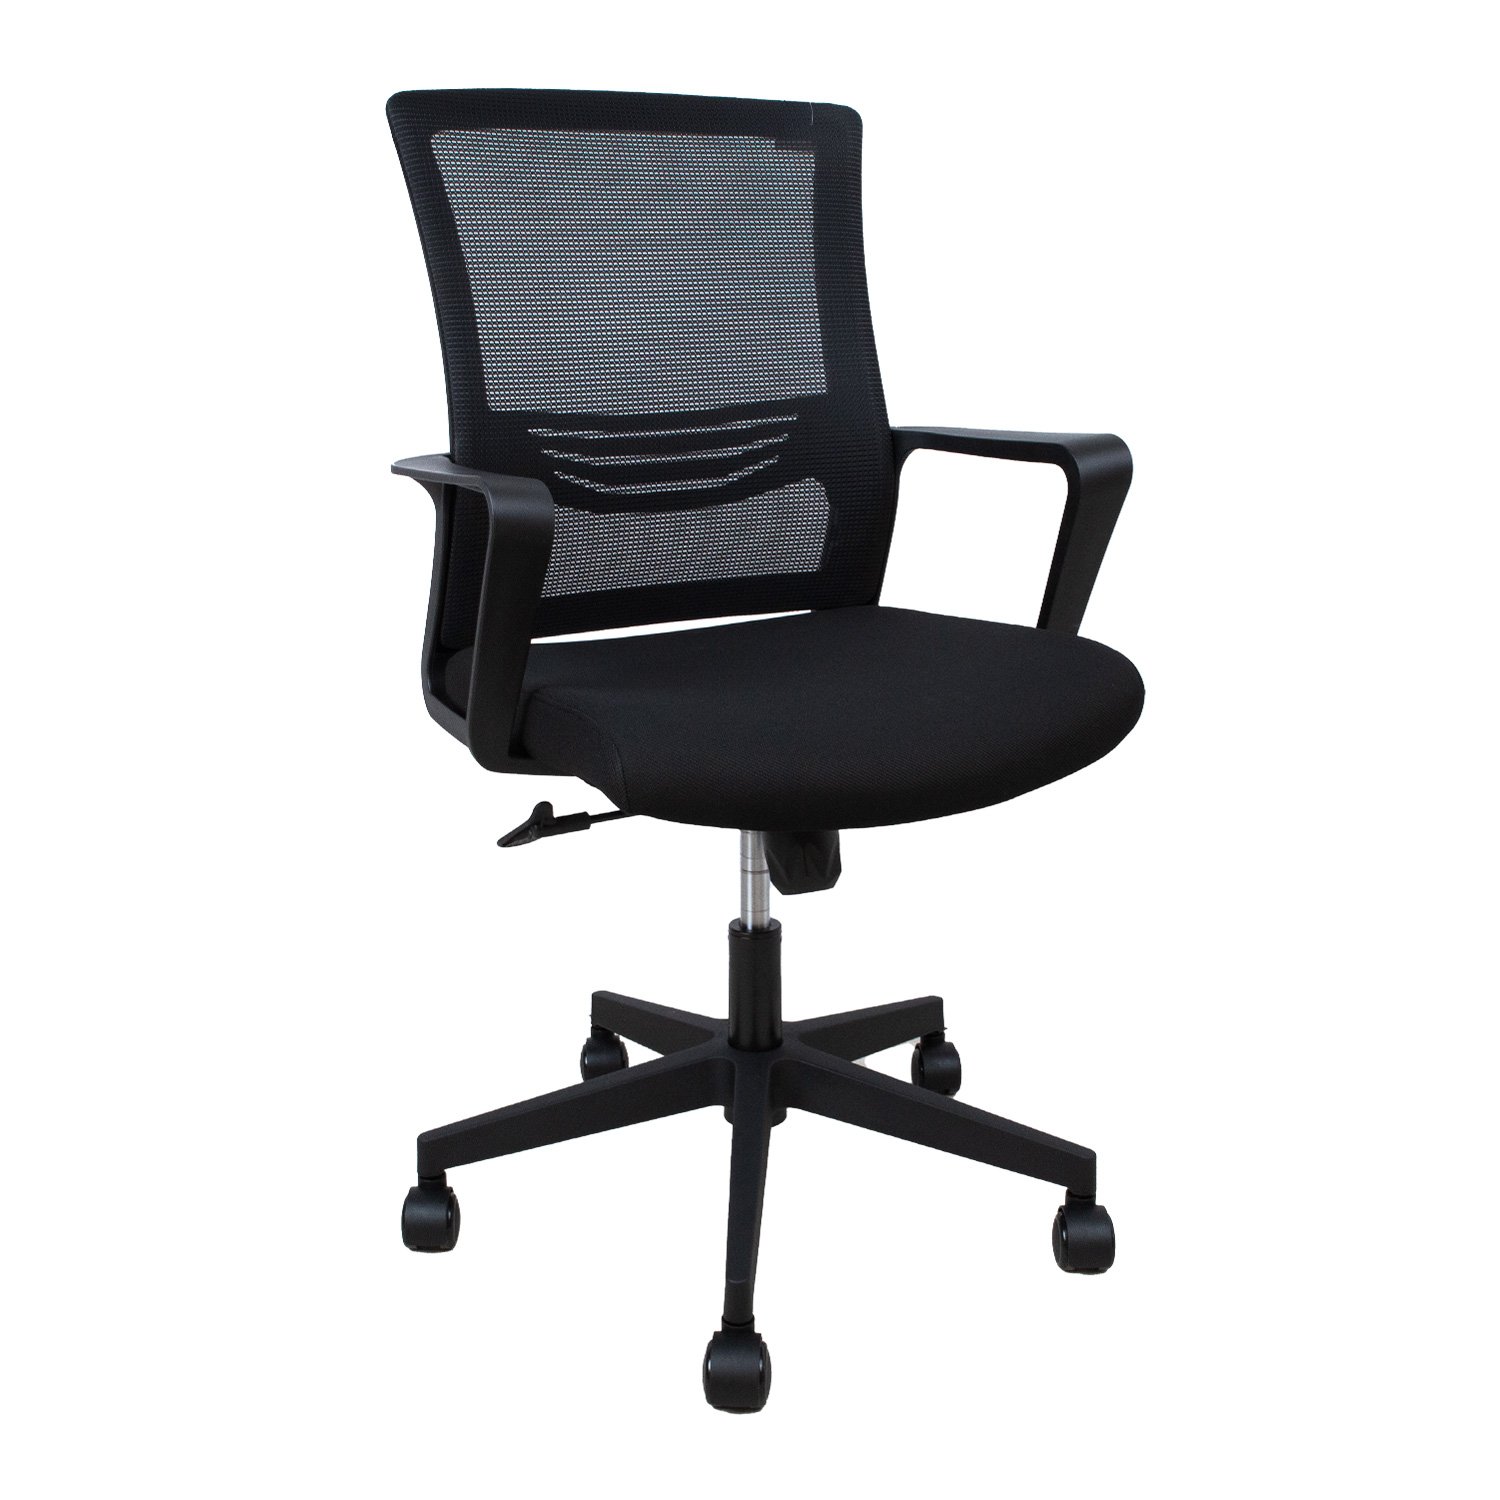 Biuro kėdė EMMA, 57x65x98-104 cm, juoda